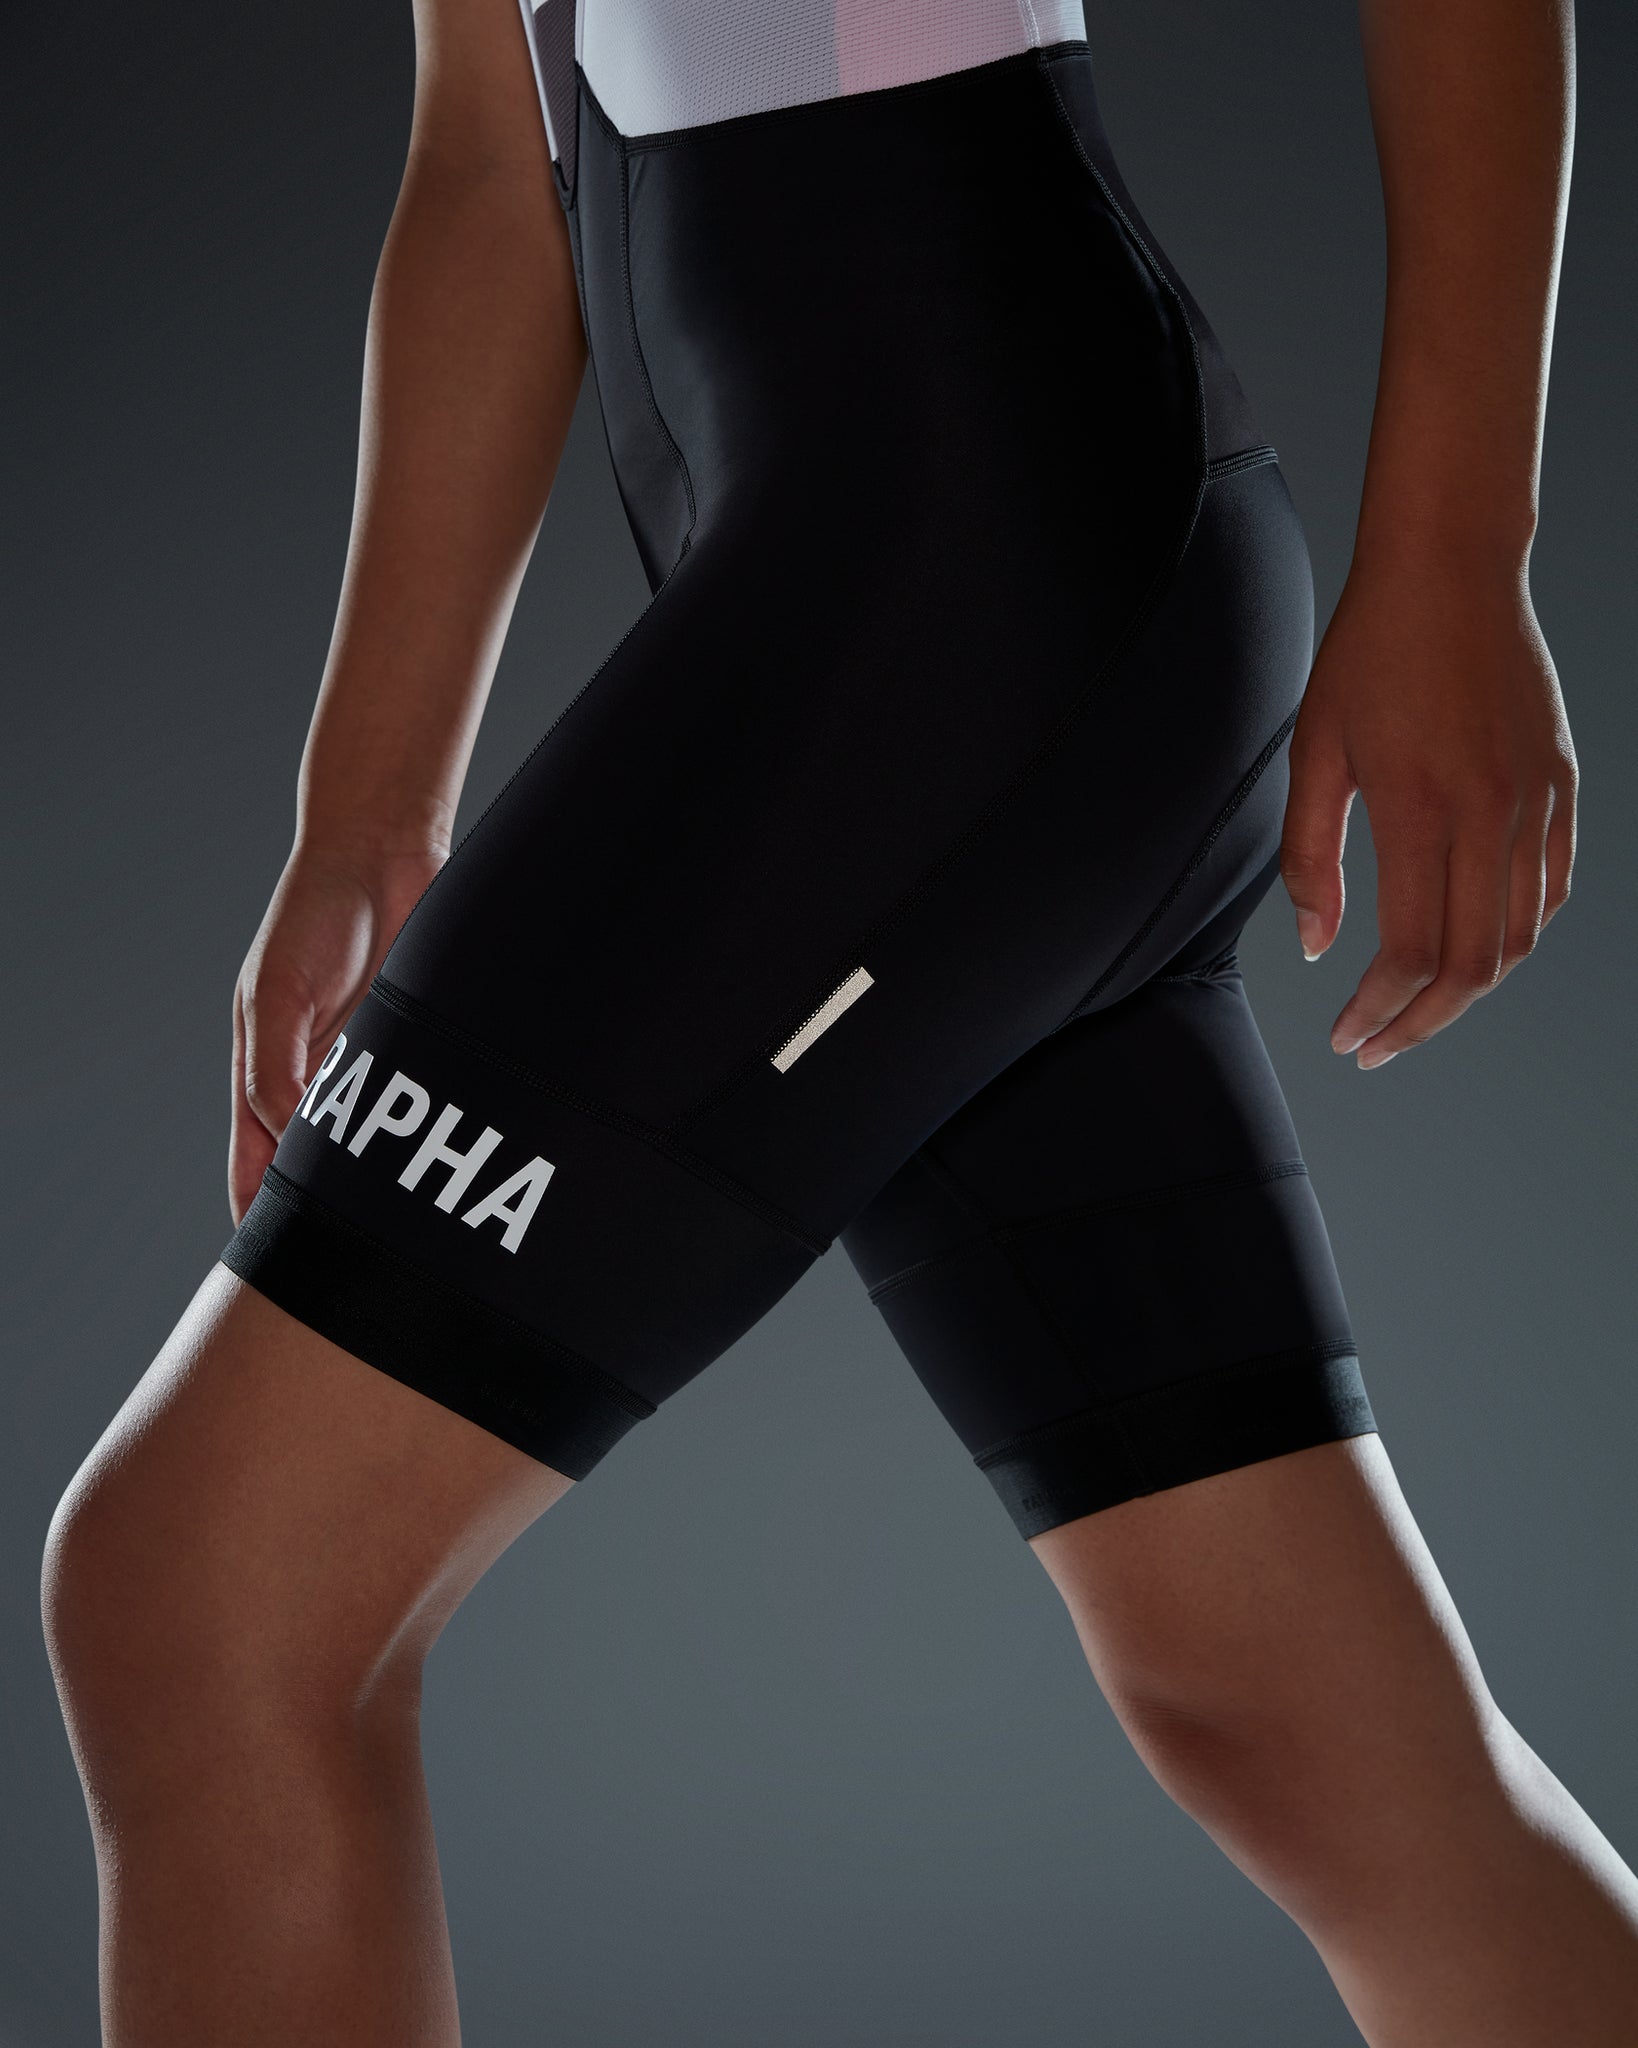 ASPENX Pro Team Women's Bib Shorts Side Detail